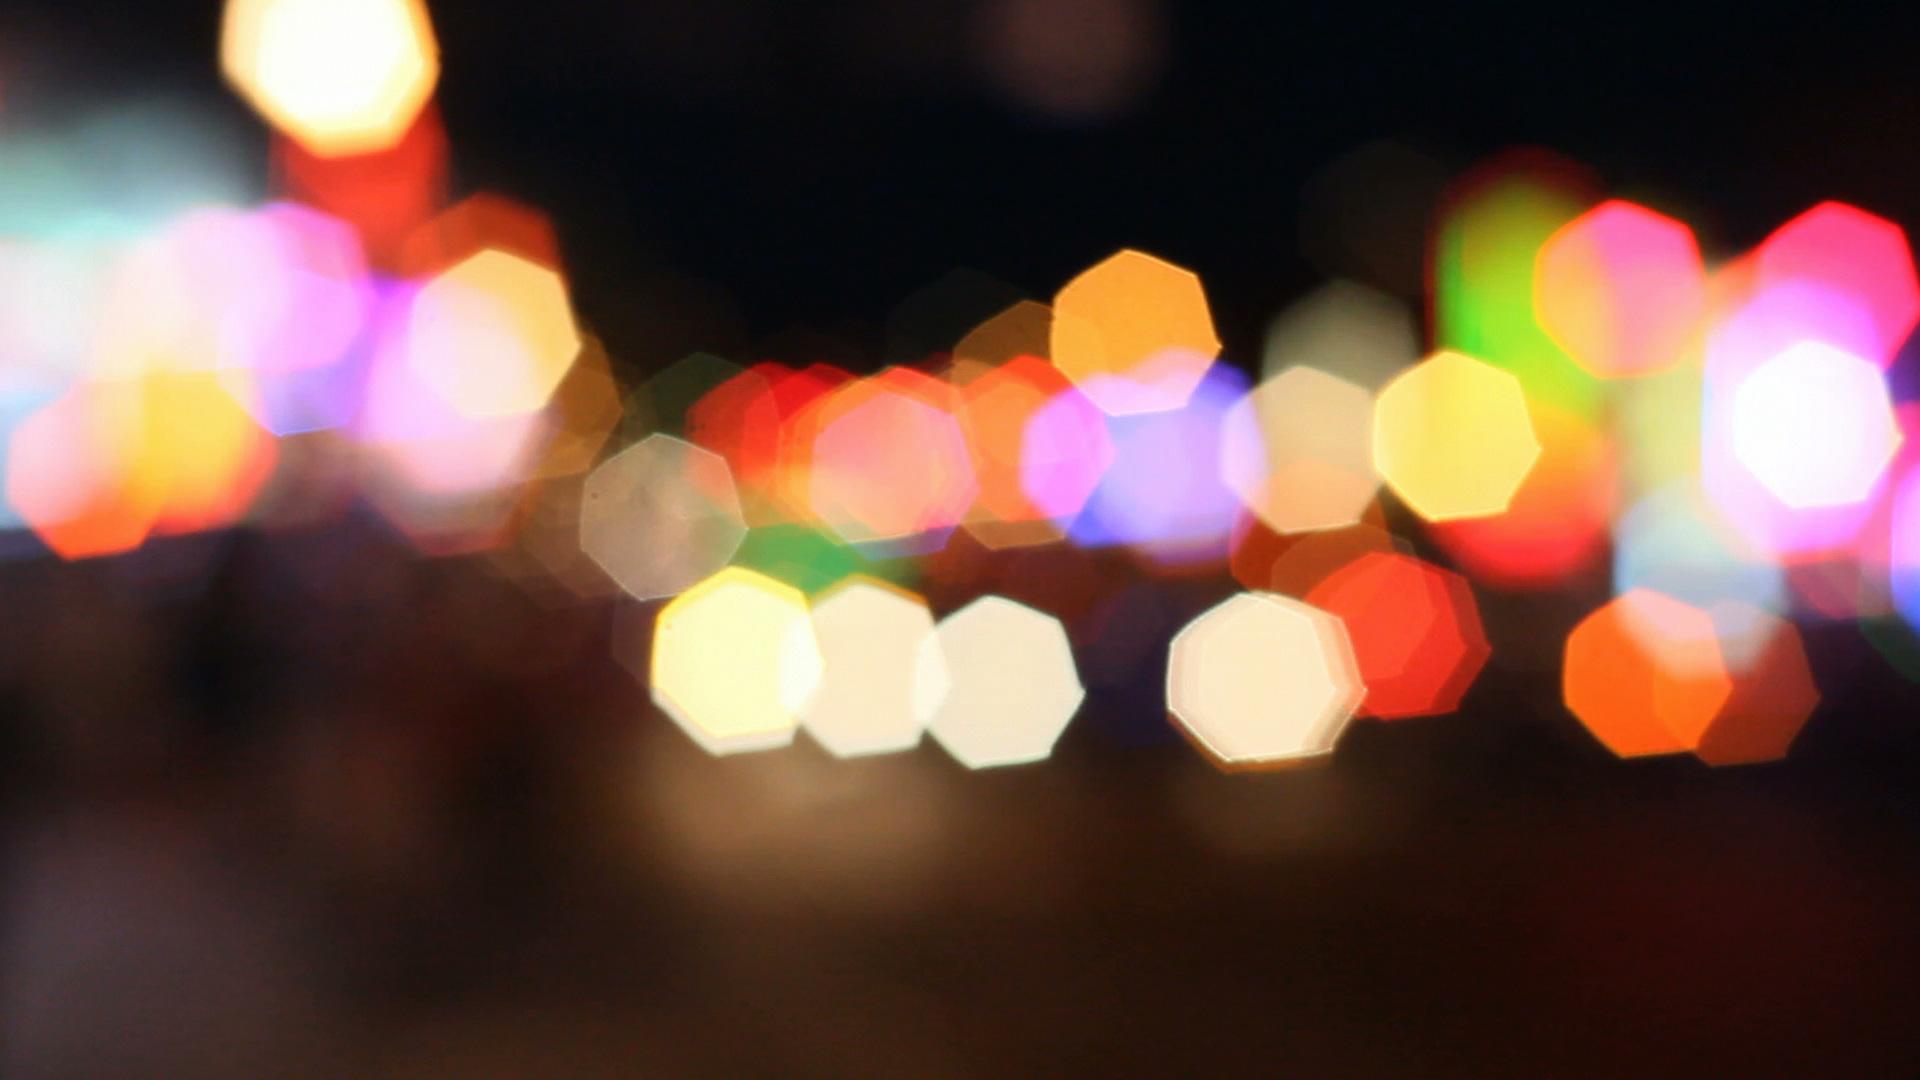 Getting Blurred Lights in Nightime Video : DSLR Video